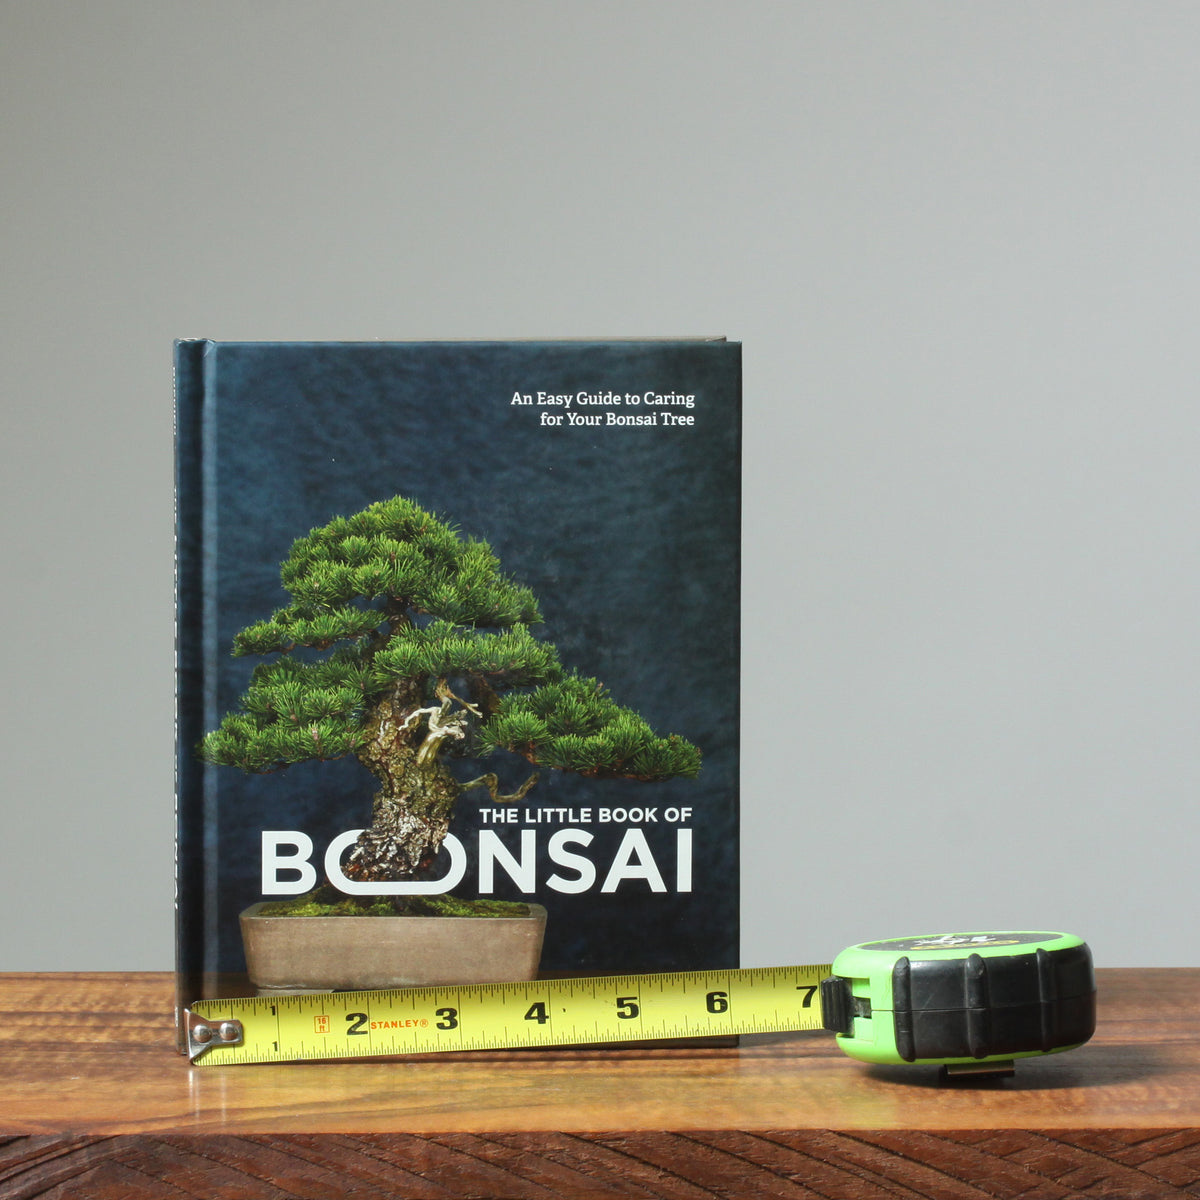 Bonsai Basics Kit: Make an Indoor Bonsai Tree! – Bonsaify